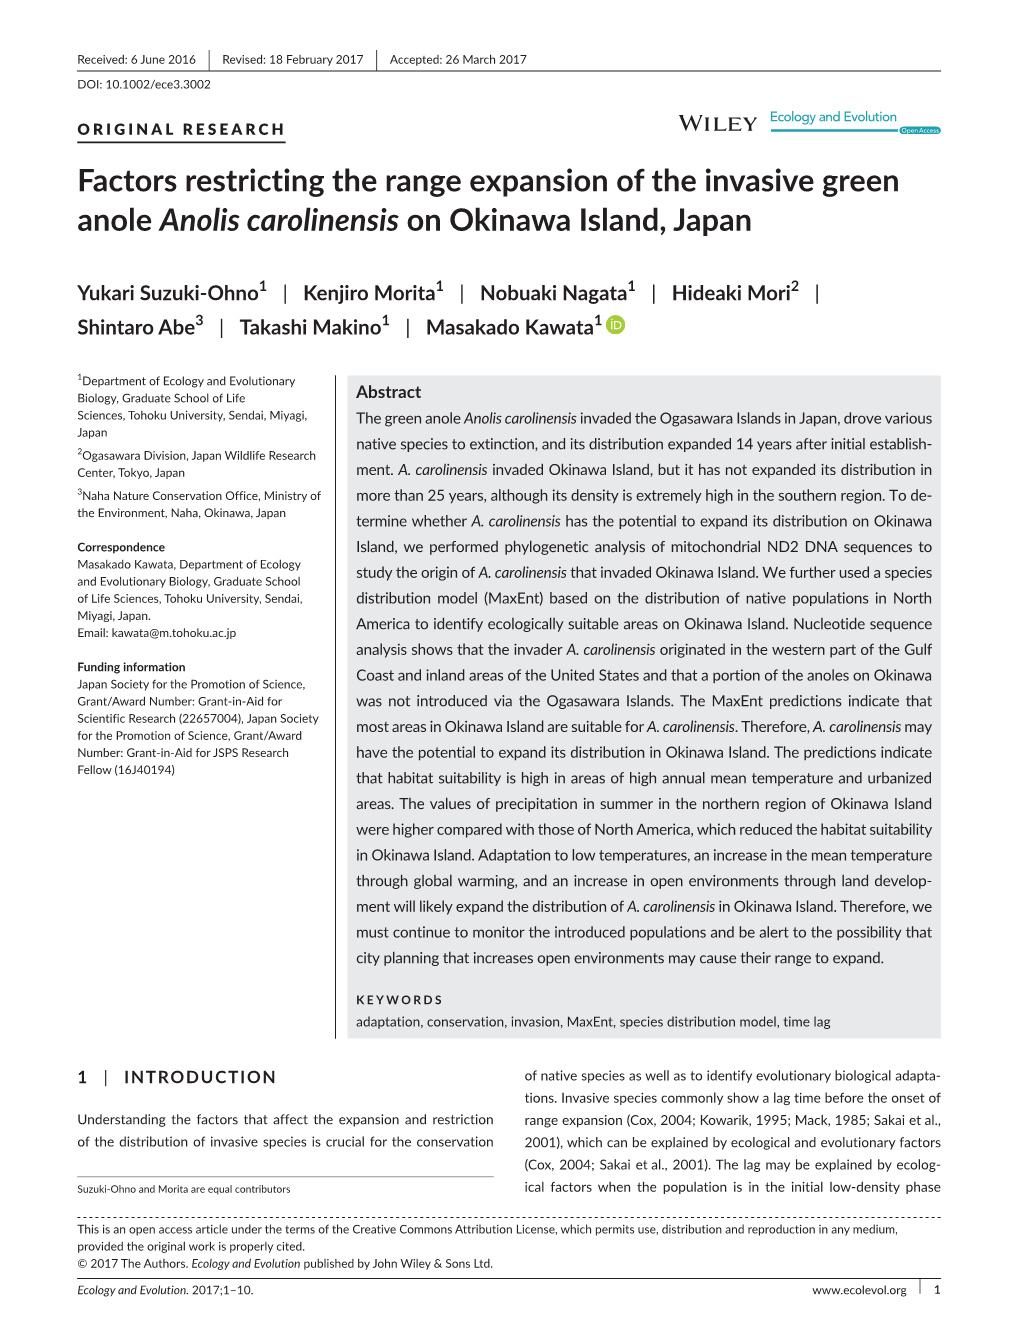 Factors Restricting the Range Expansion of the Invasive Green Anole Anolis Carolinensis on Okinawa Island, Japan